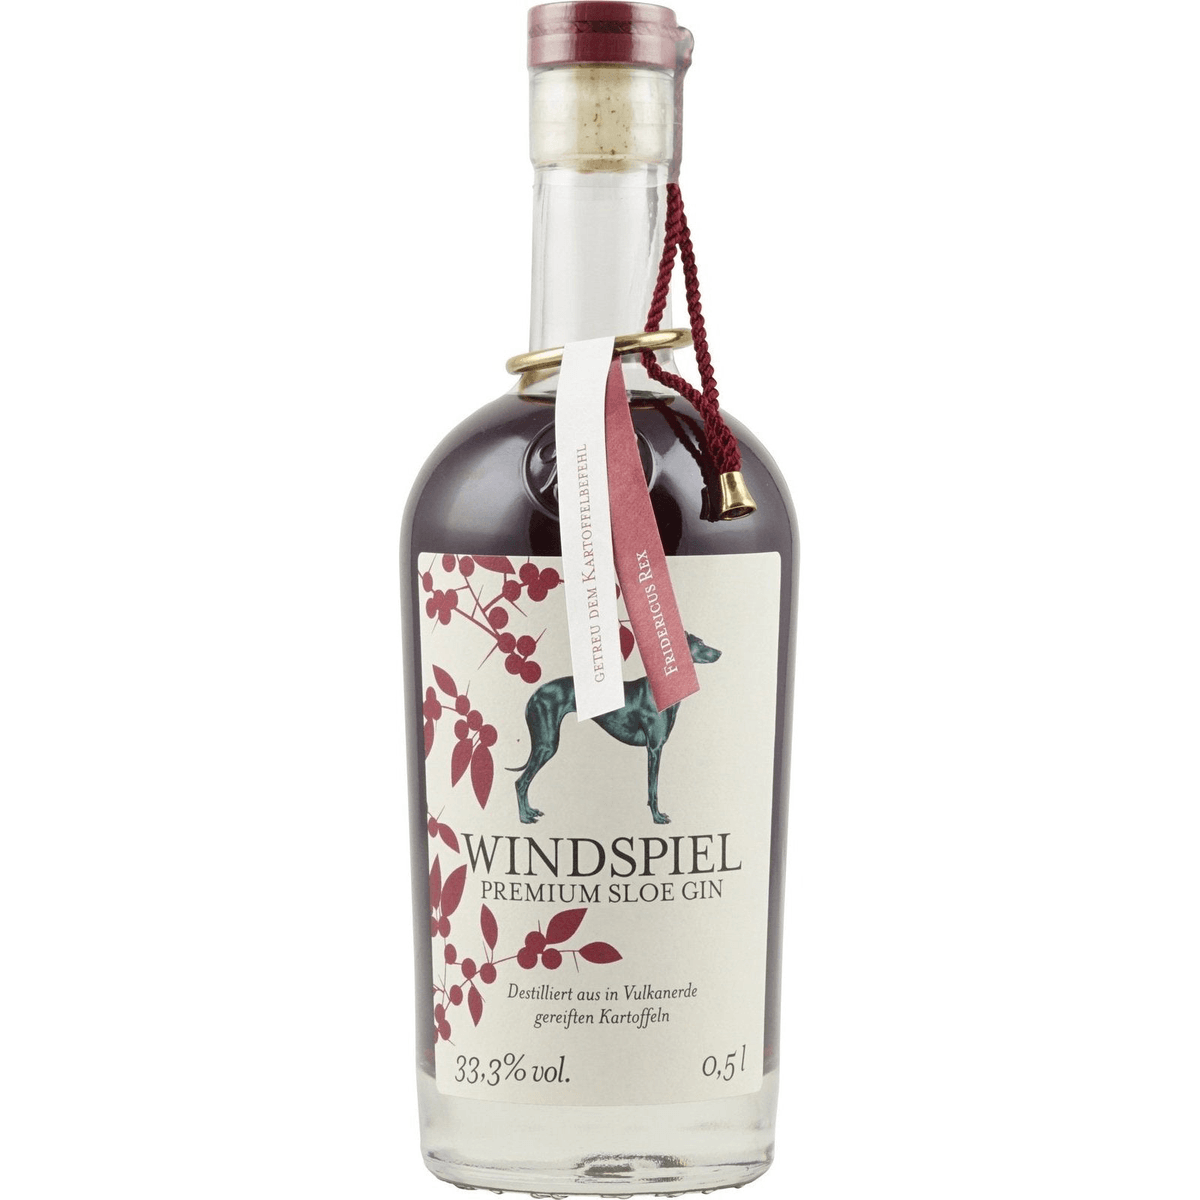 0,5L Winebuyers 33,3% Gin Sloe Windspiel Premium Vol. |